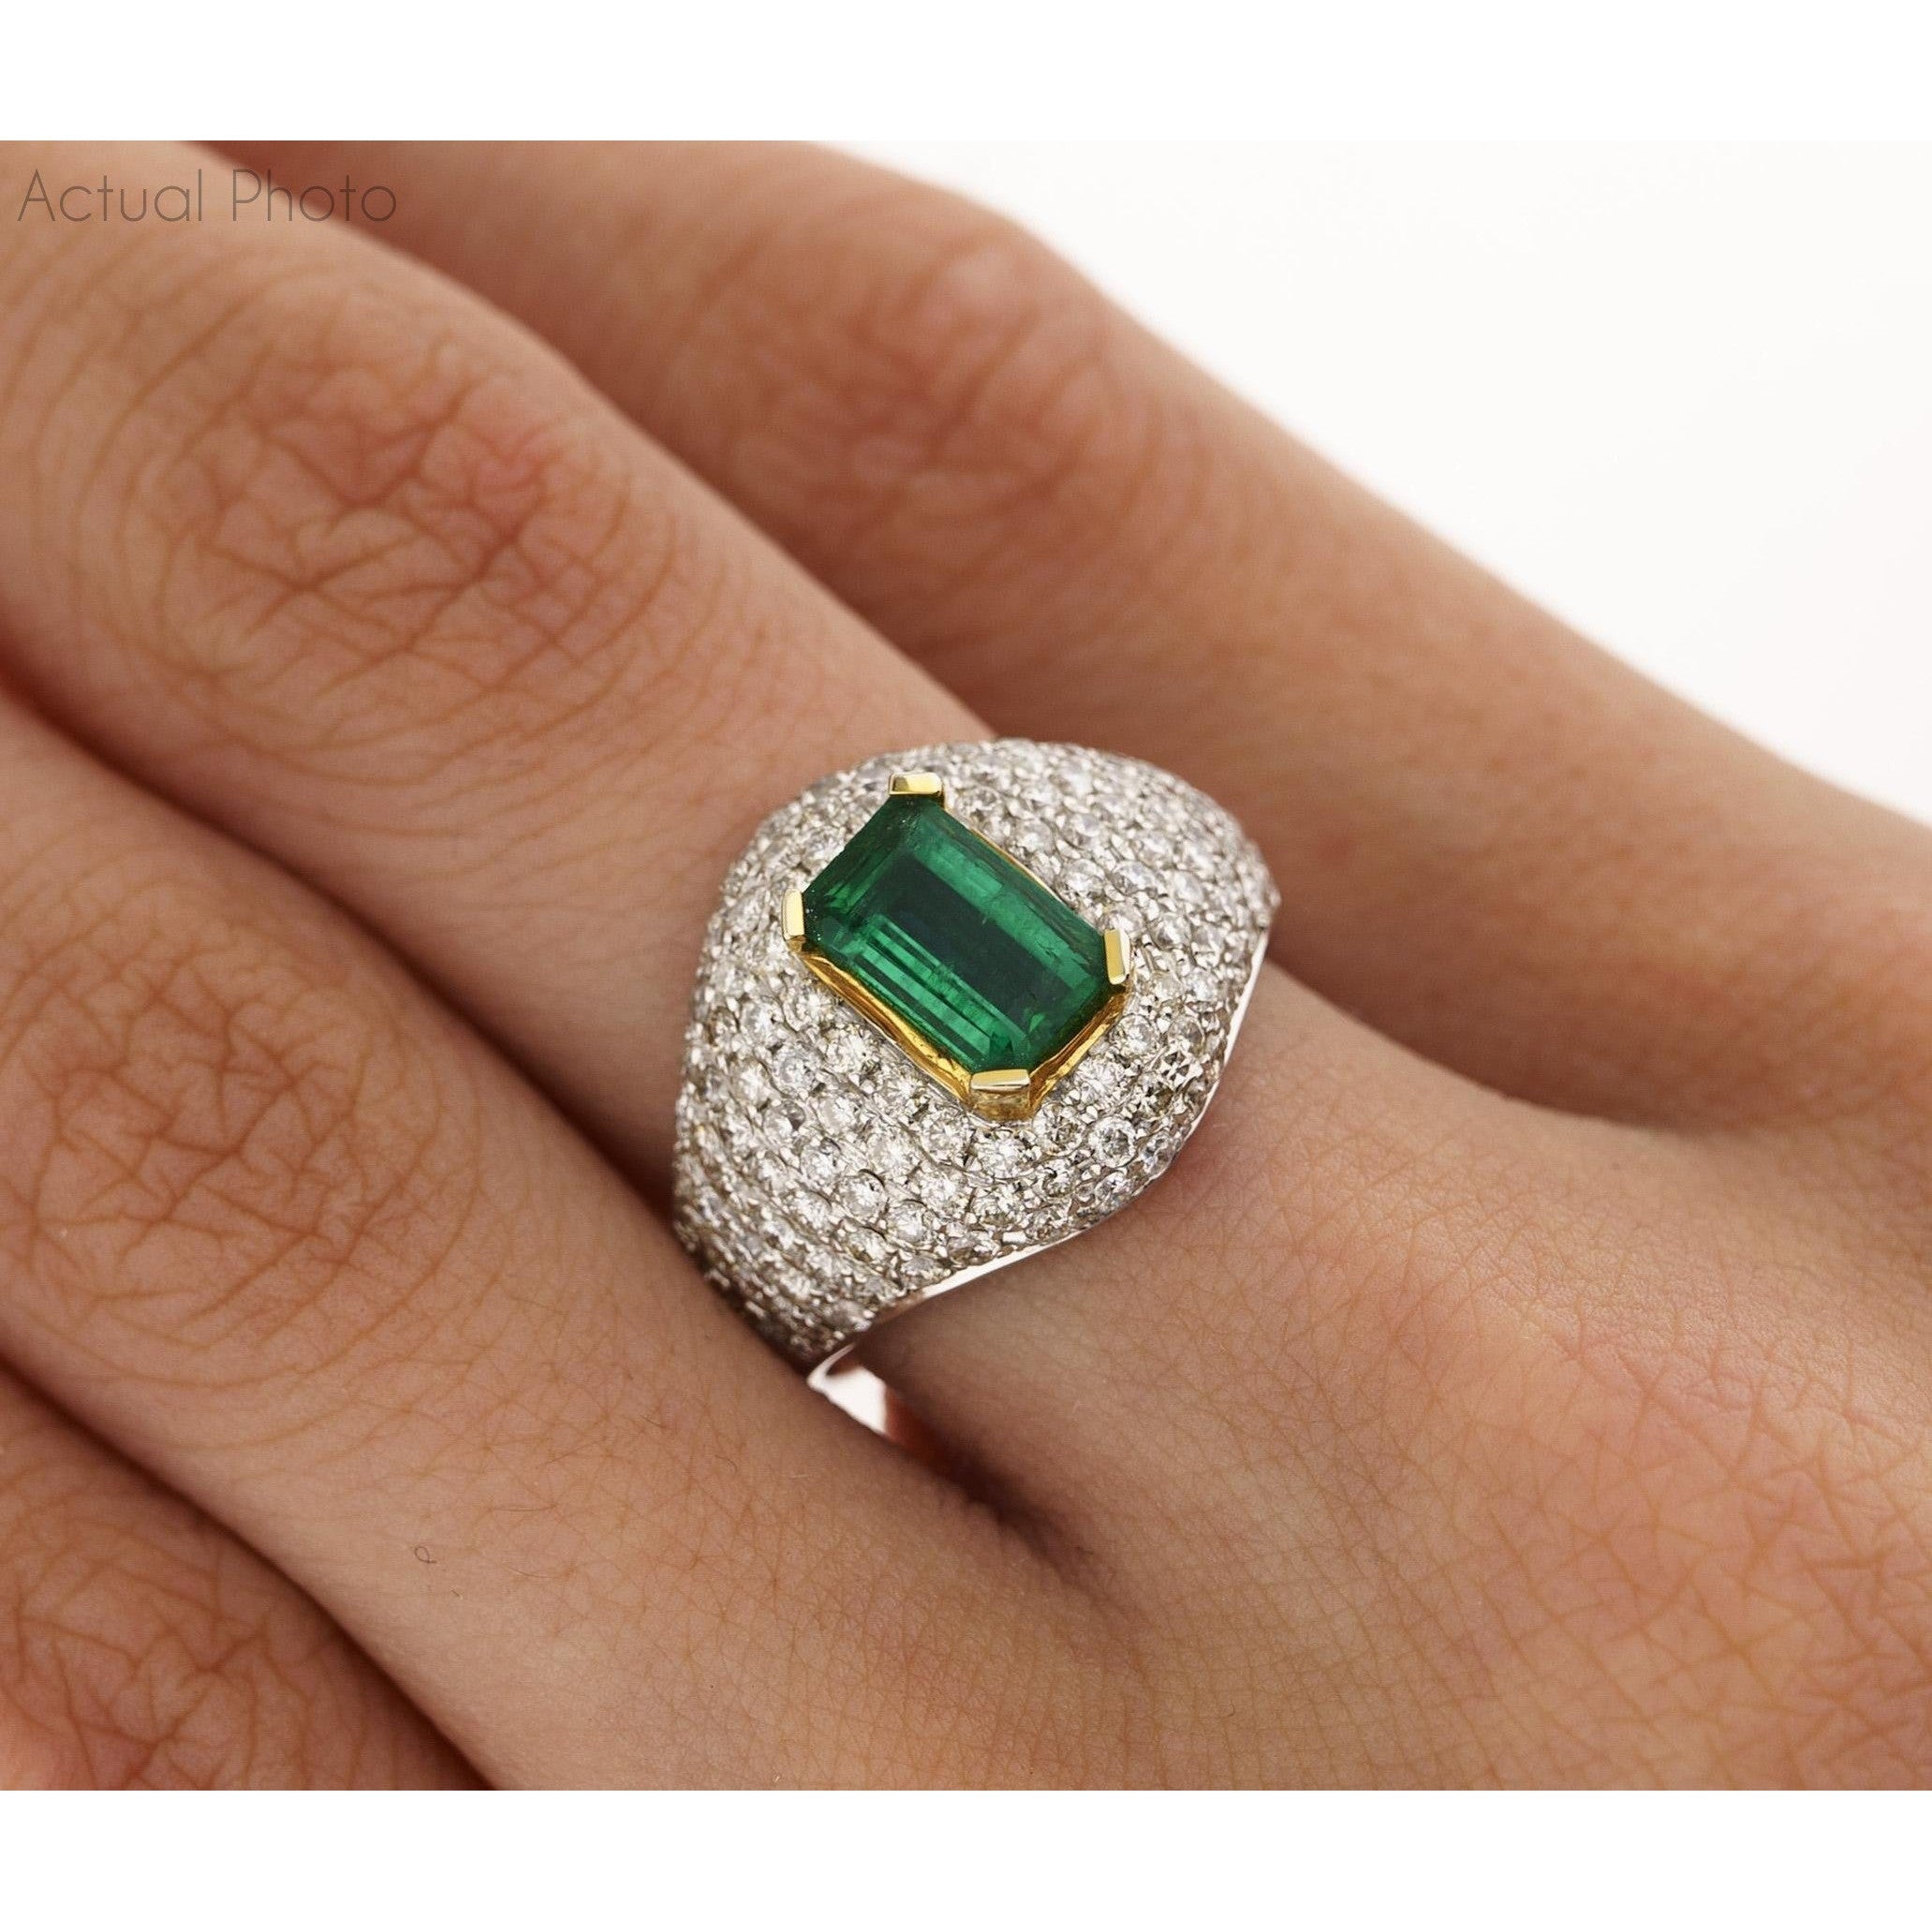 1.25 Carat Zambian Emerald and Diamond Pave Cluster Art Deco Ring